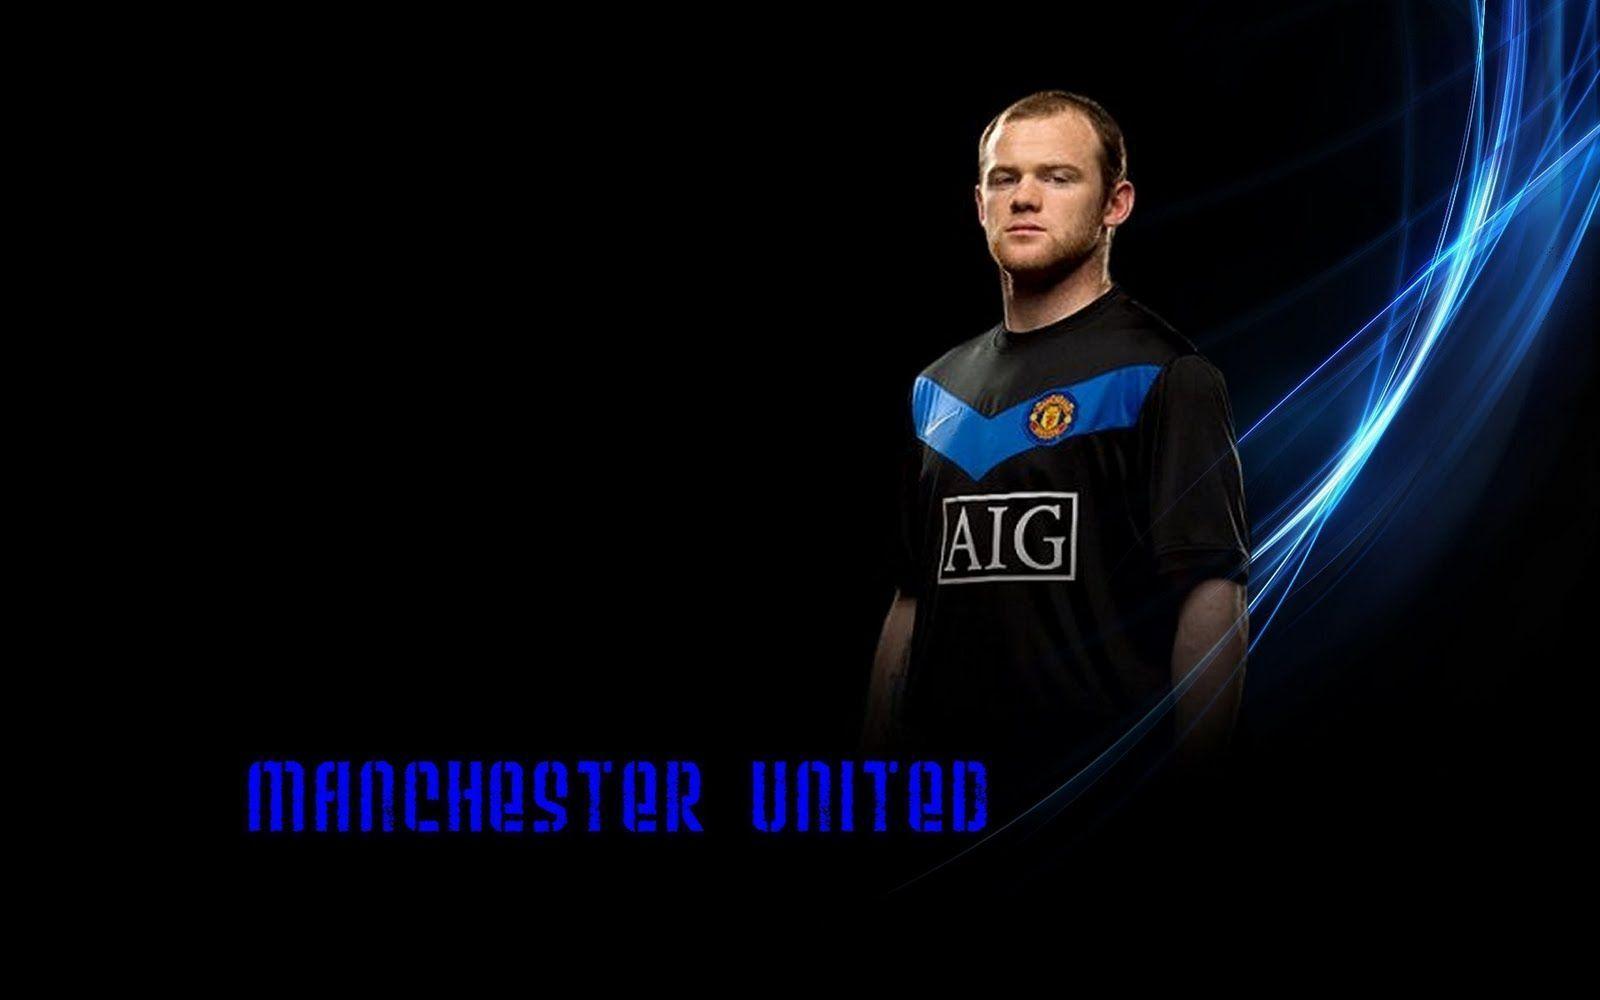 Wayne Rooney Manchester United Wallpaper. Wallpaper HD Free Download